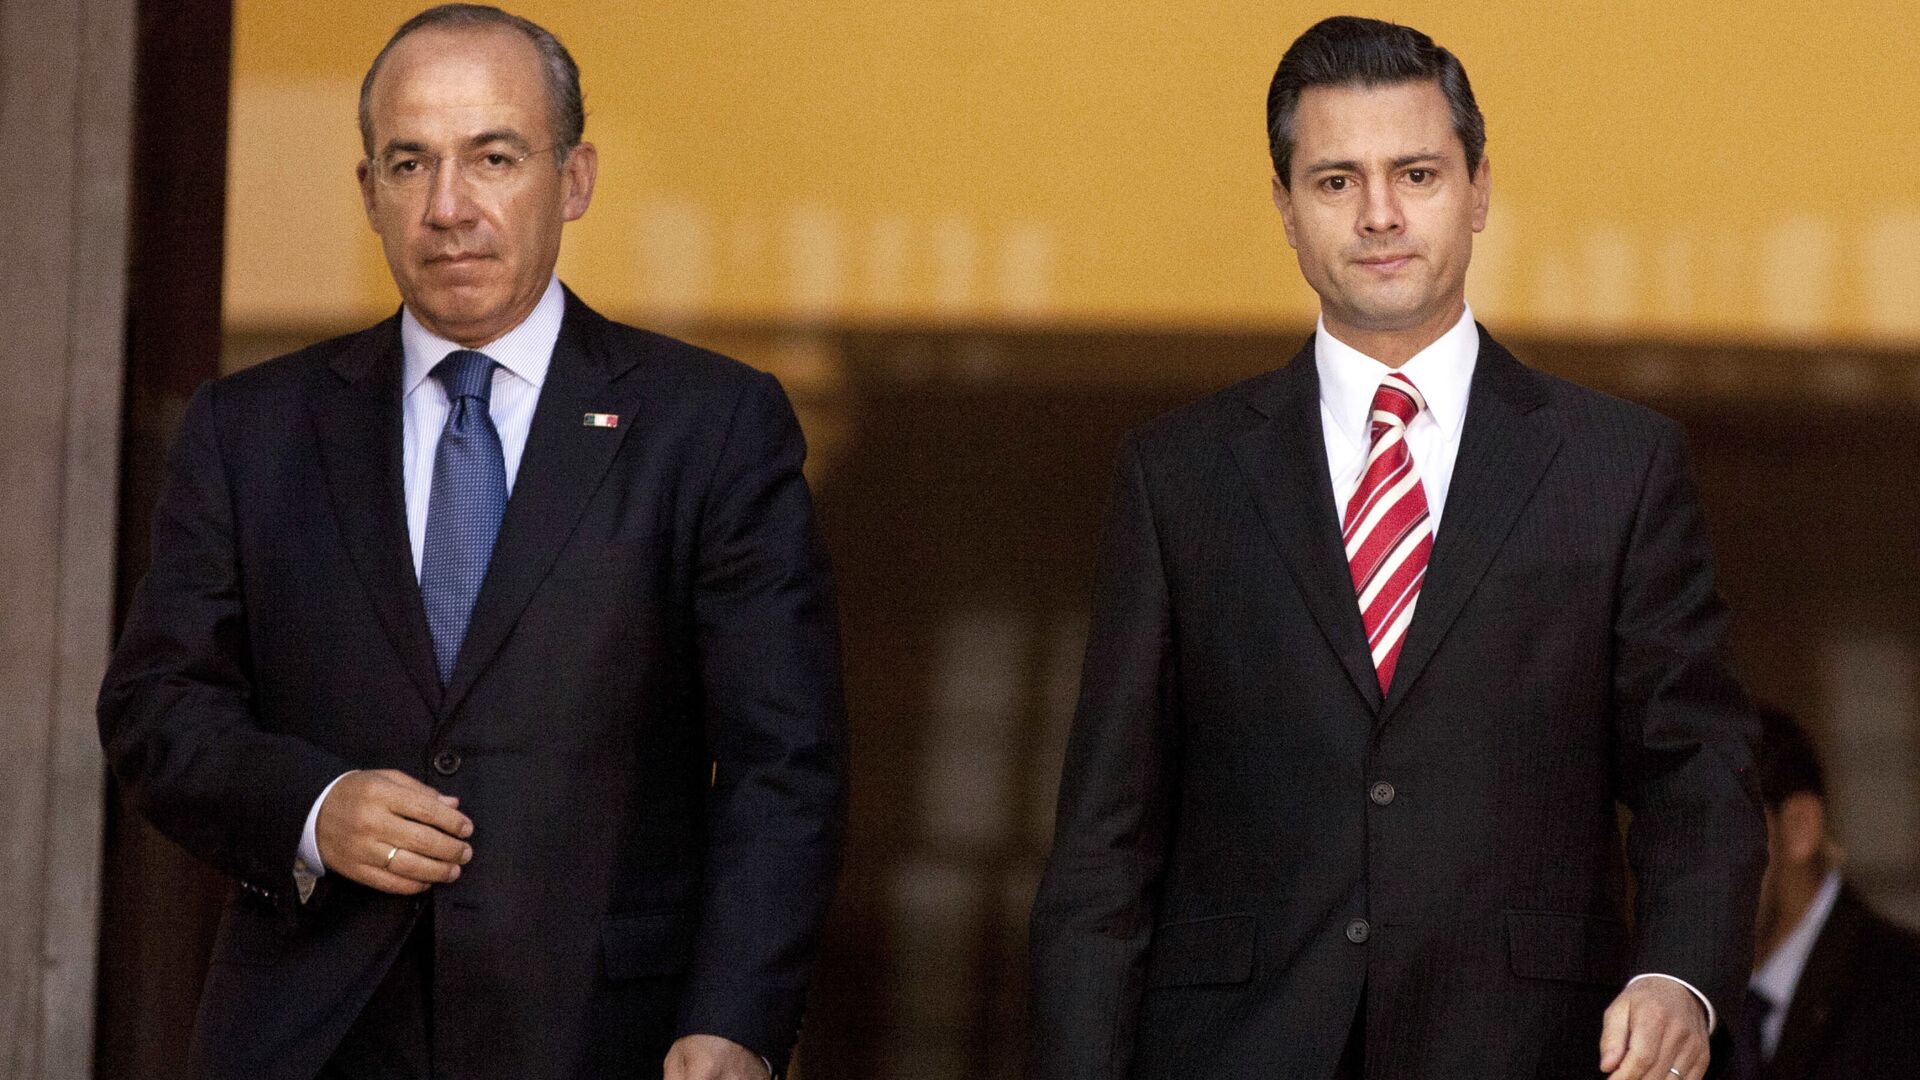 Felipe Calderón Hinojosa y Enrique Peña Nieto, expresidentes de México - Sputnik Mundo, 1920, 17.08.2021